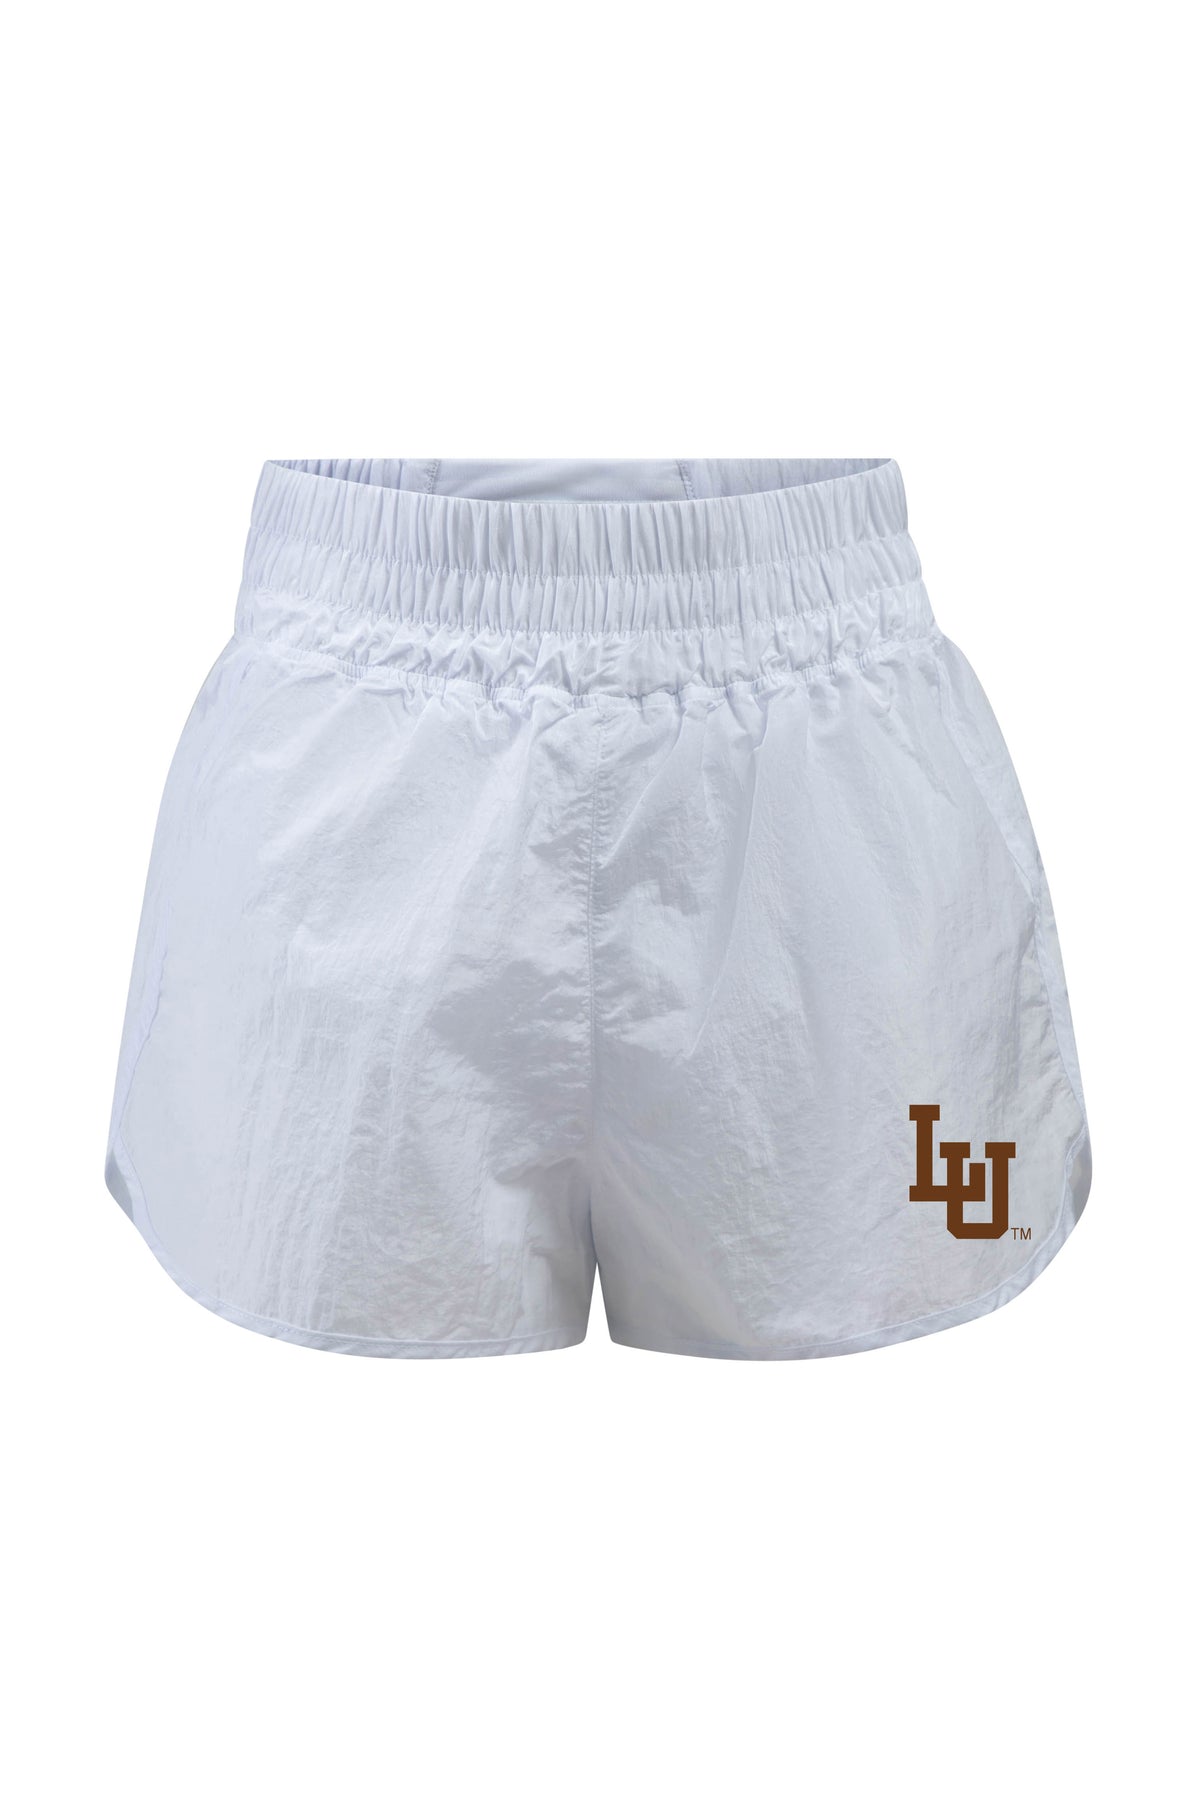 Lehigh University Boxer Short